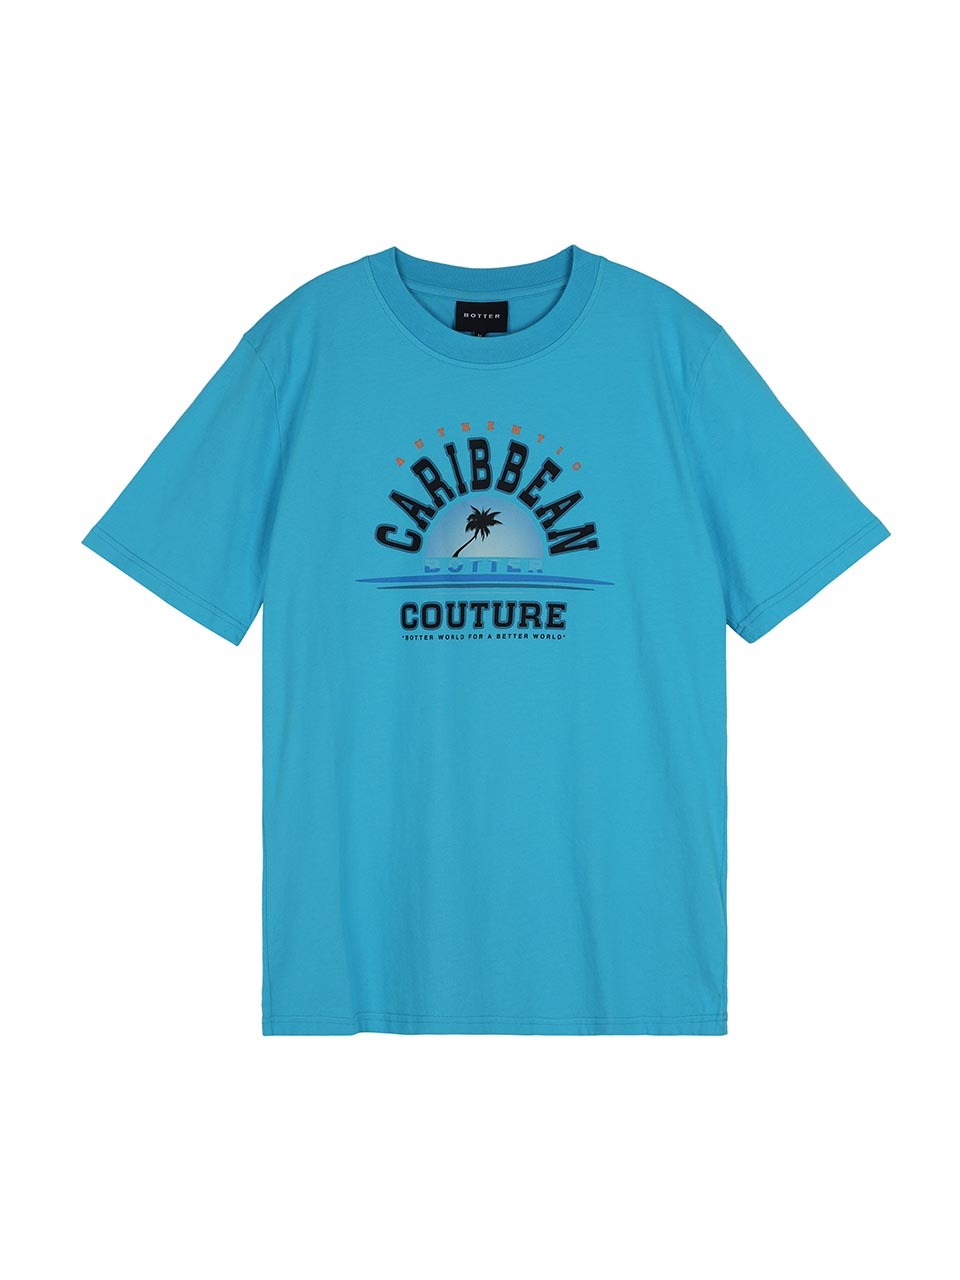 BOTTER - CLASSIC CARIBBEAN COUTURE T SHIRT (BLUE)